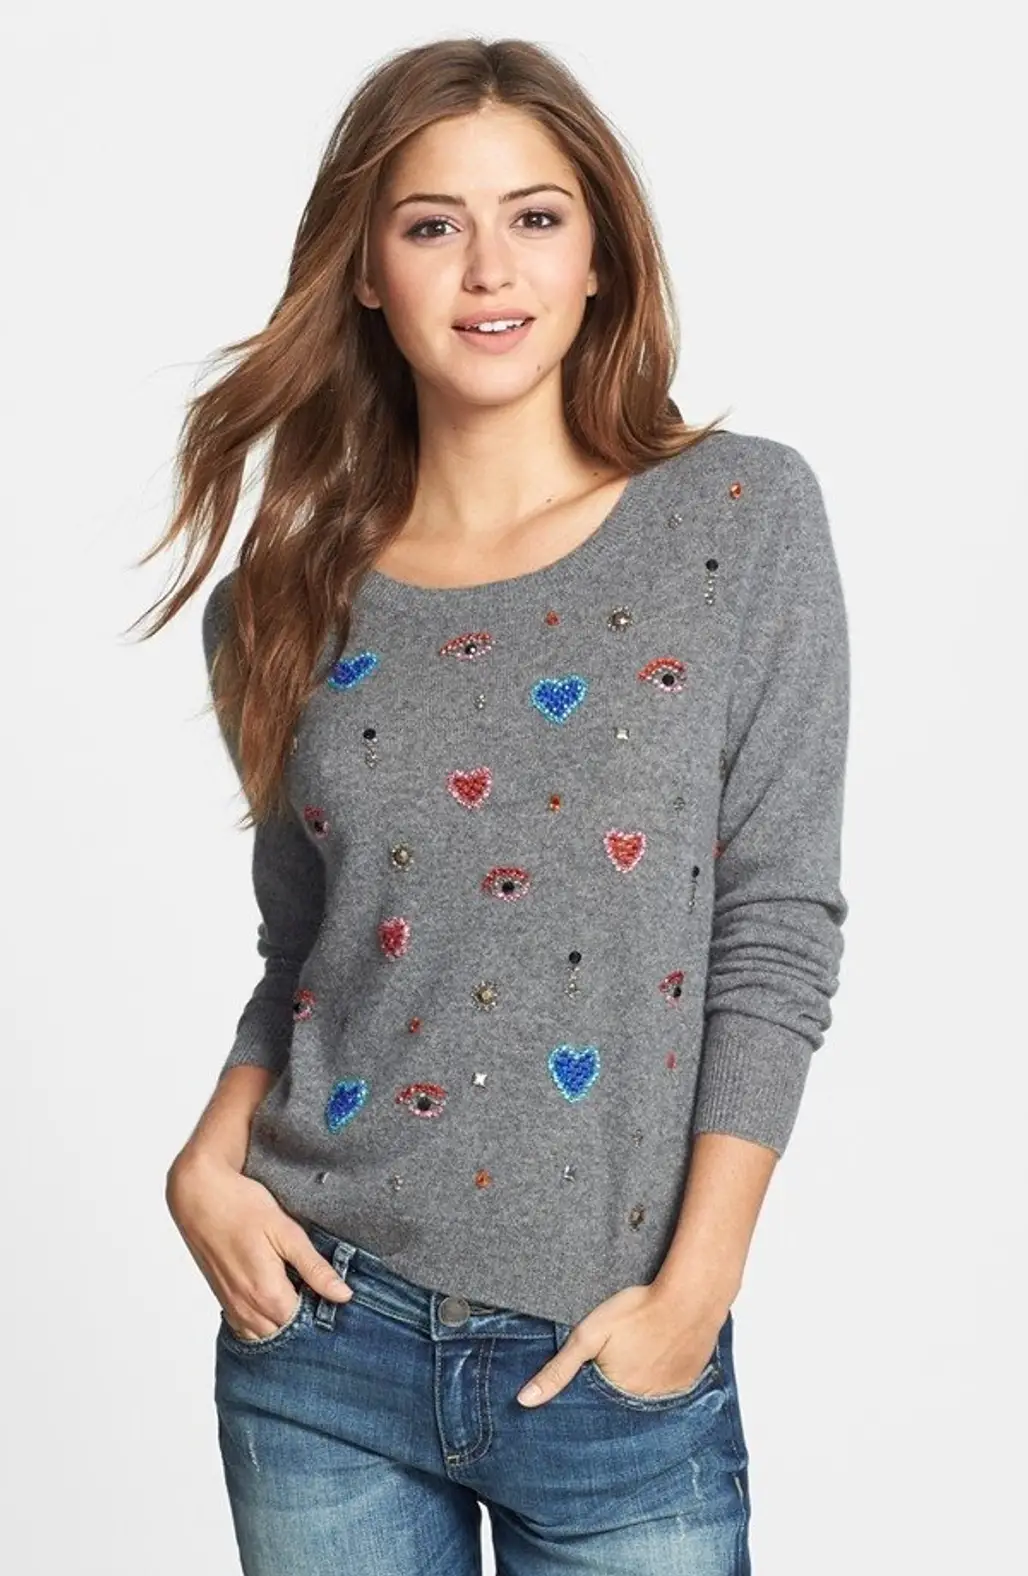 Jewel Embellished Cashmere Sweater by Halogen